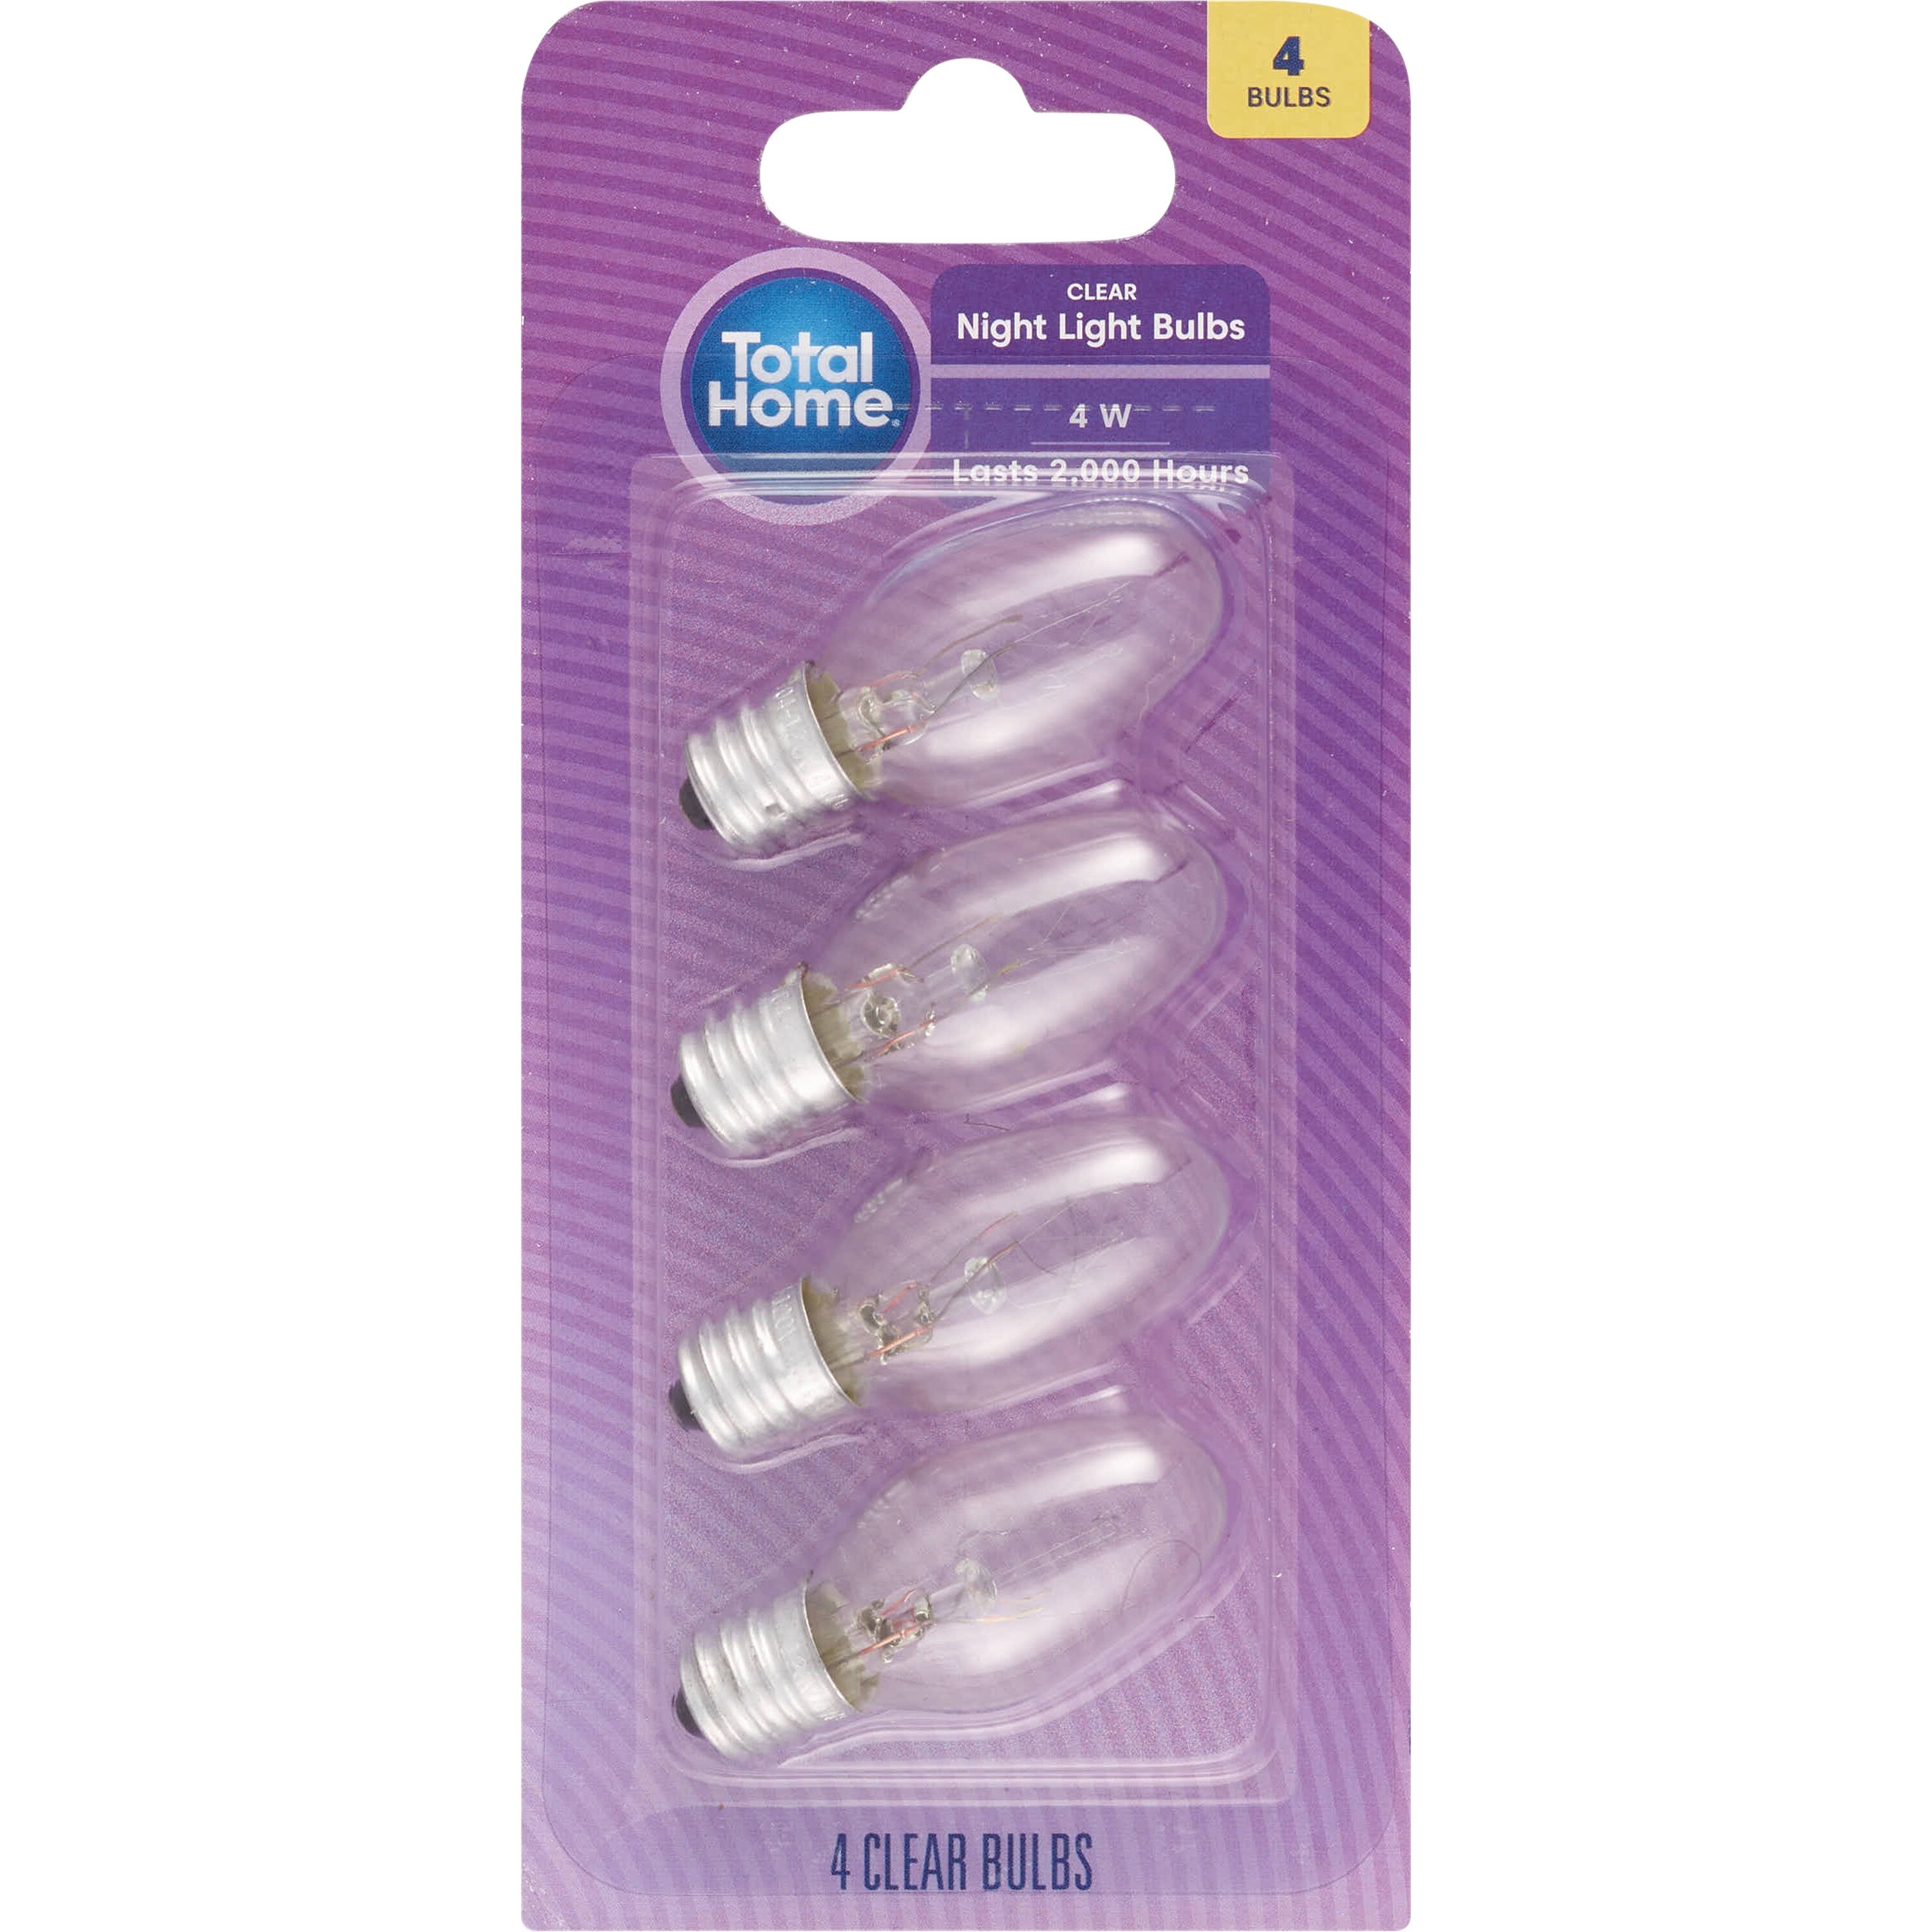 Total Home Clear Night Light Bulbs, 4 w, 4 ct